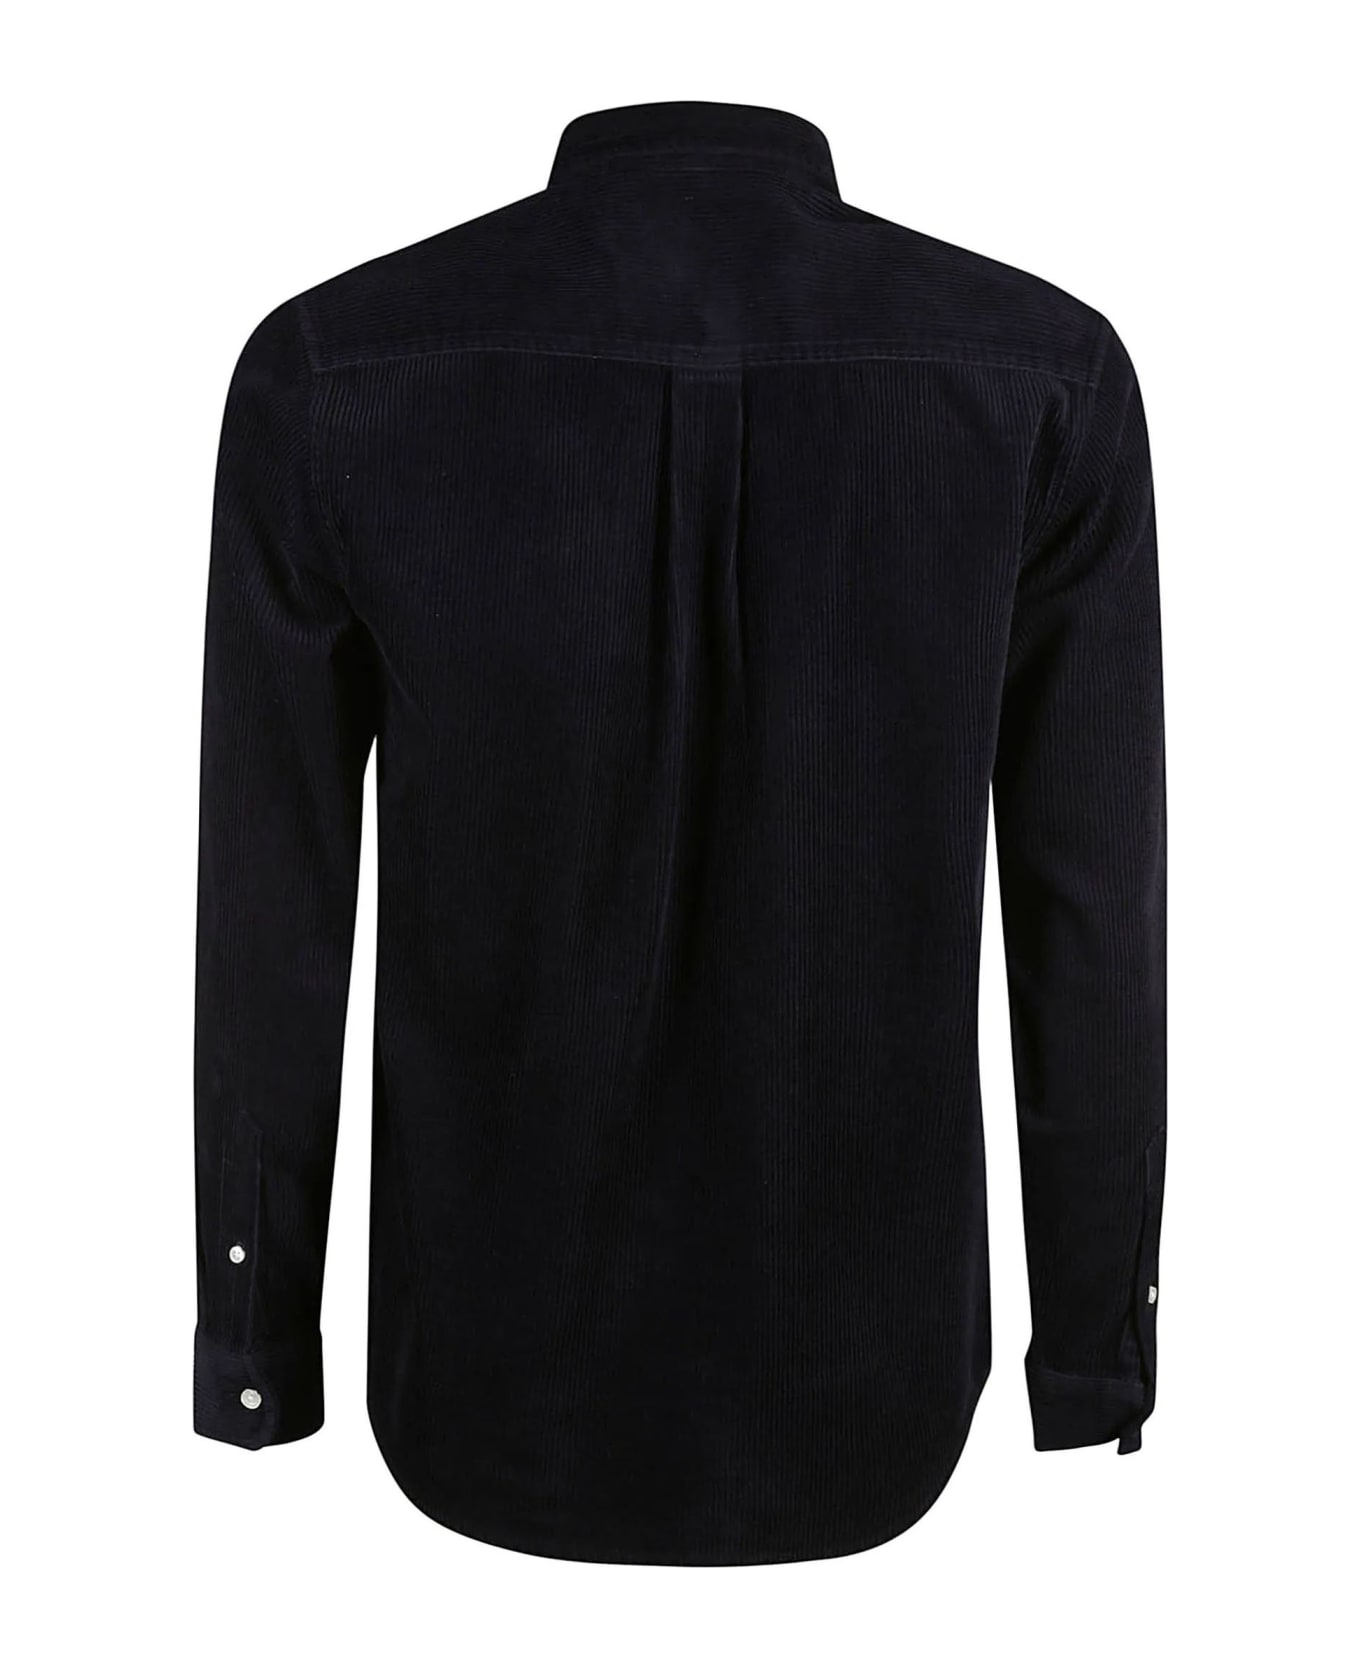 Carhartt Black Cotton Shirt - Nero